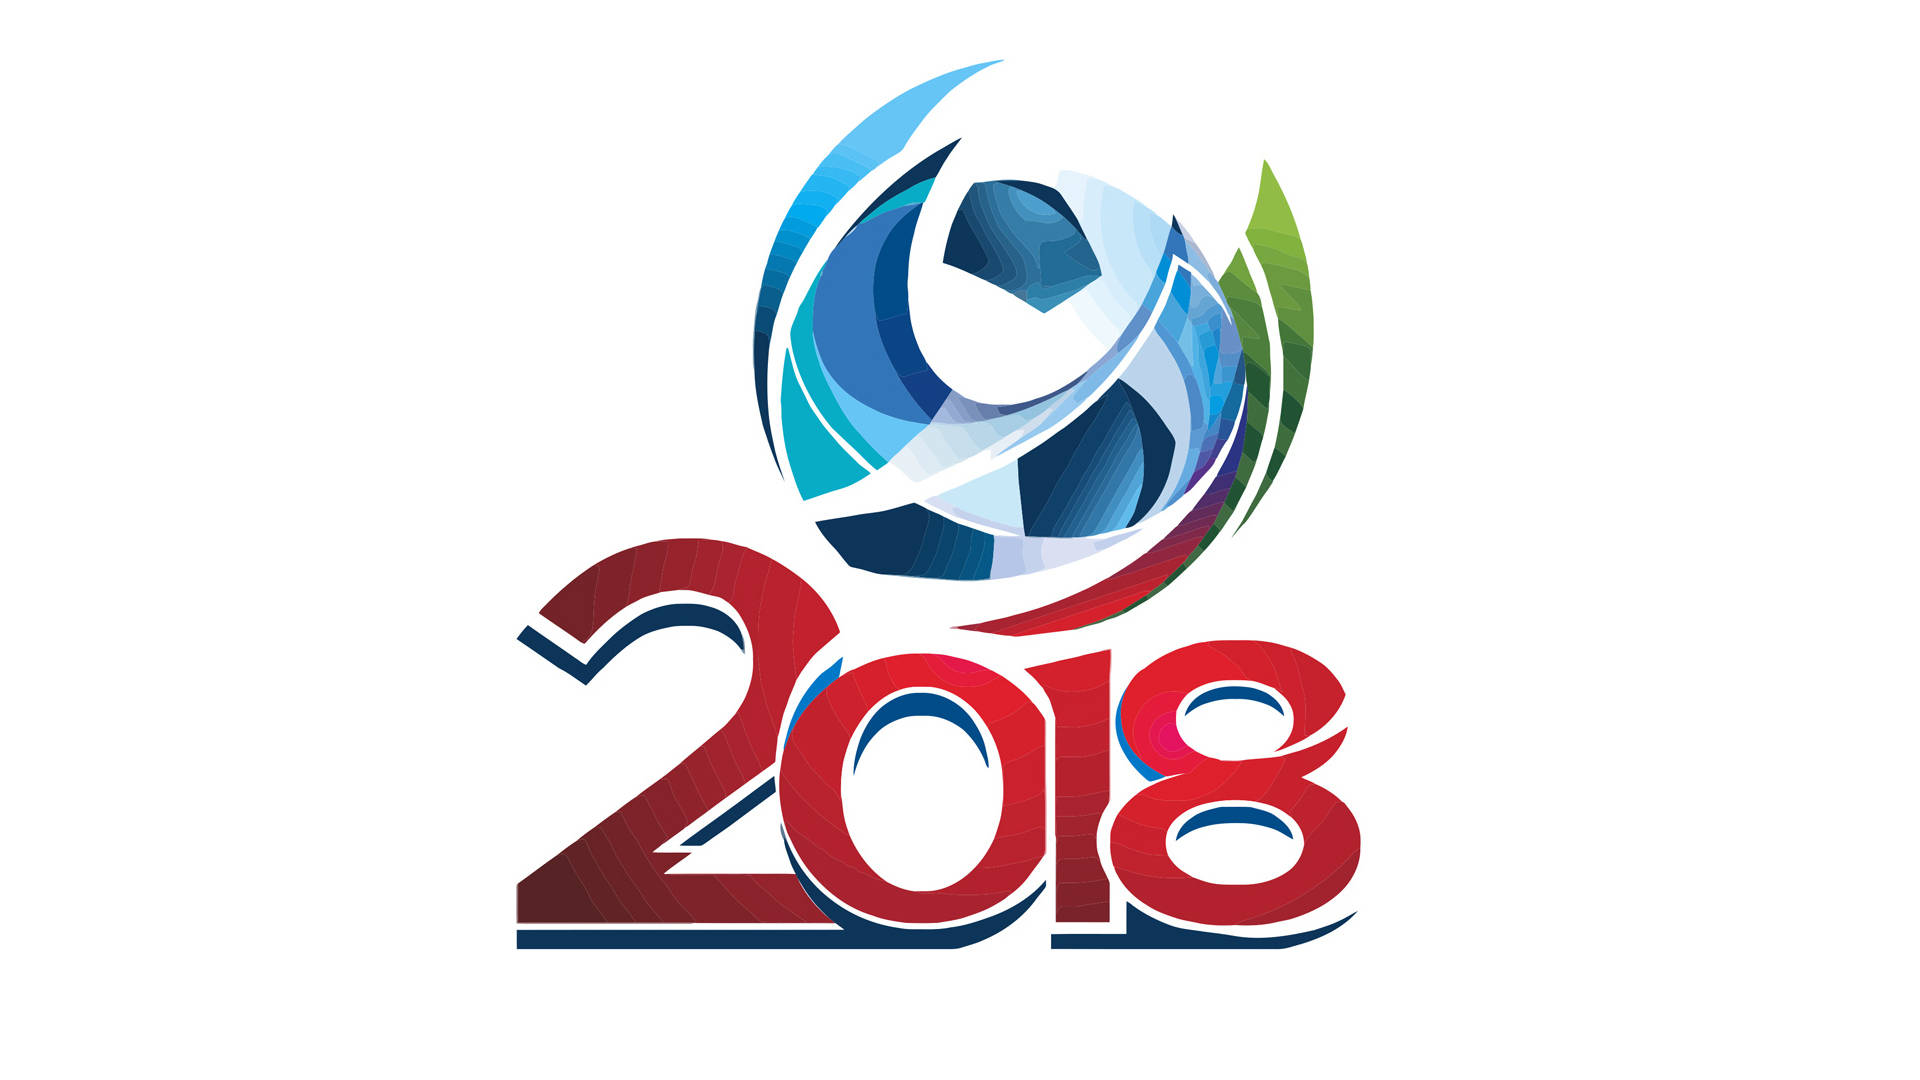 2018 Fifa World Cup Plain Poster Wallpaper